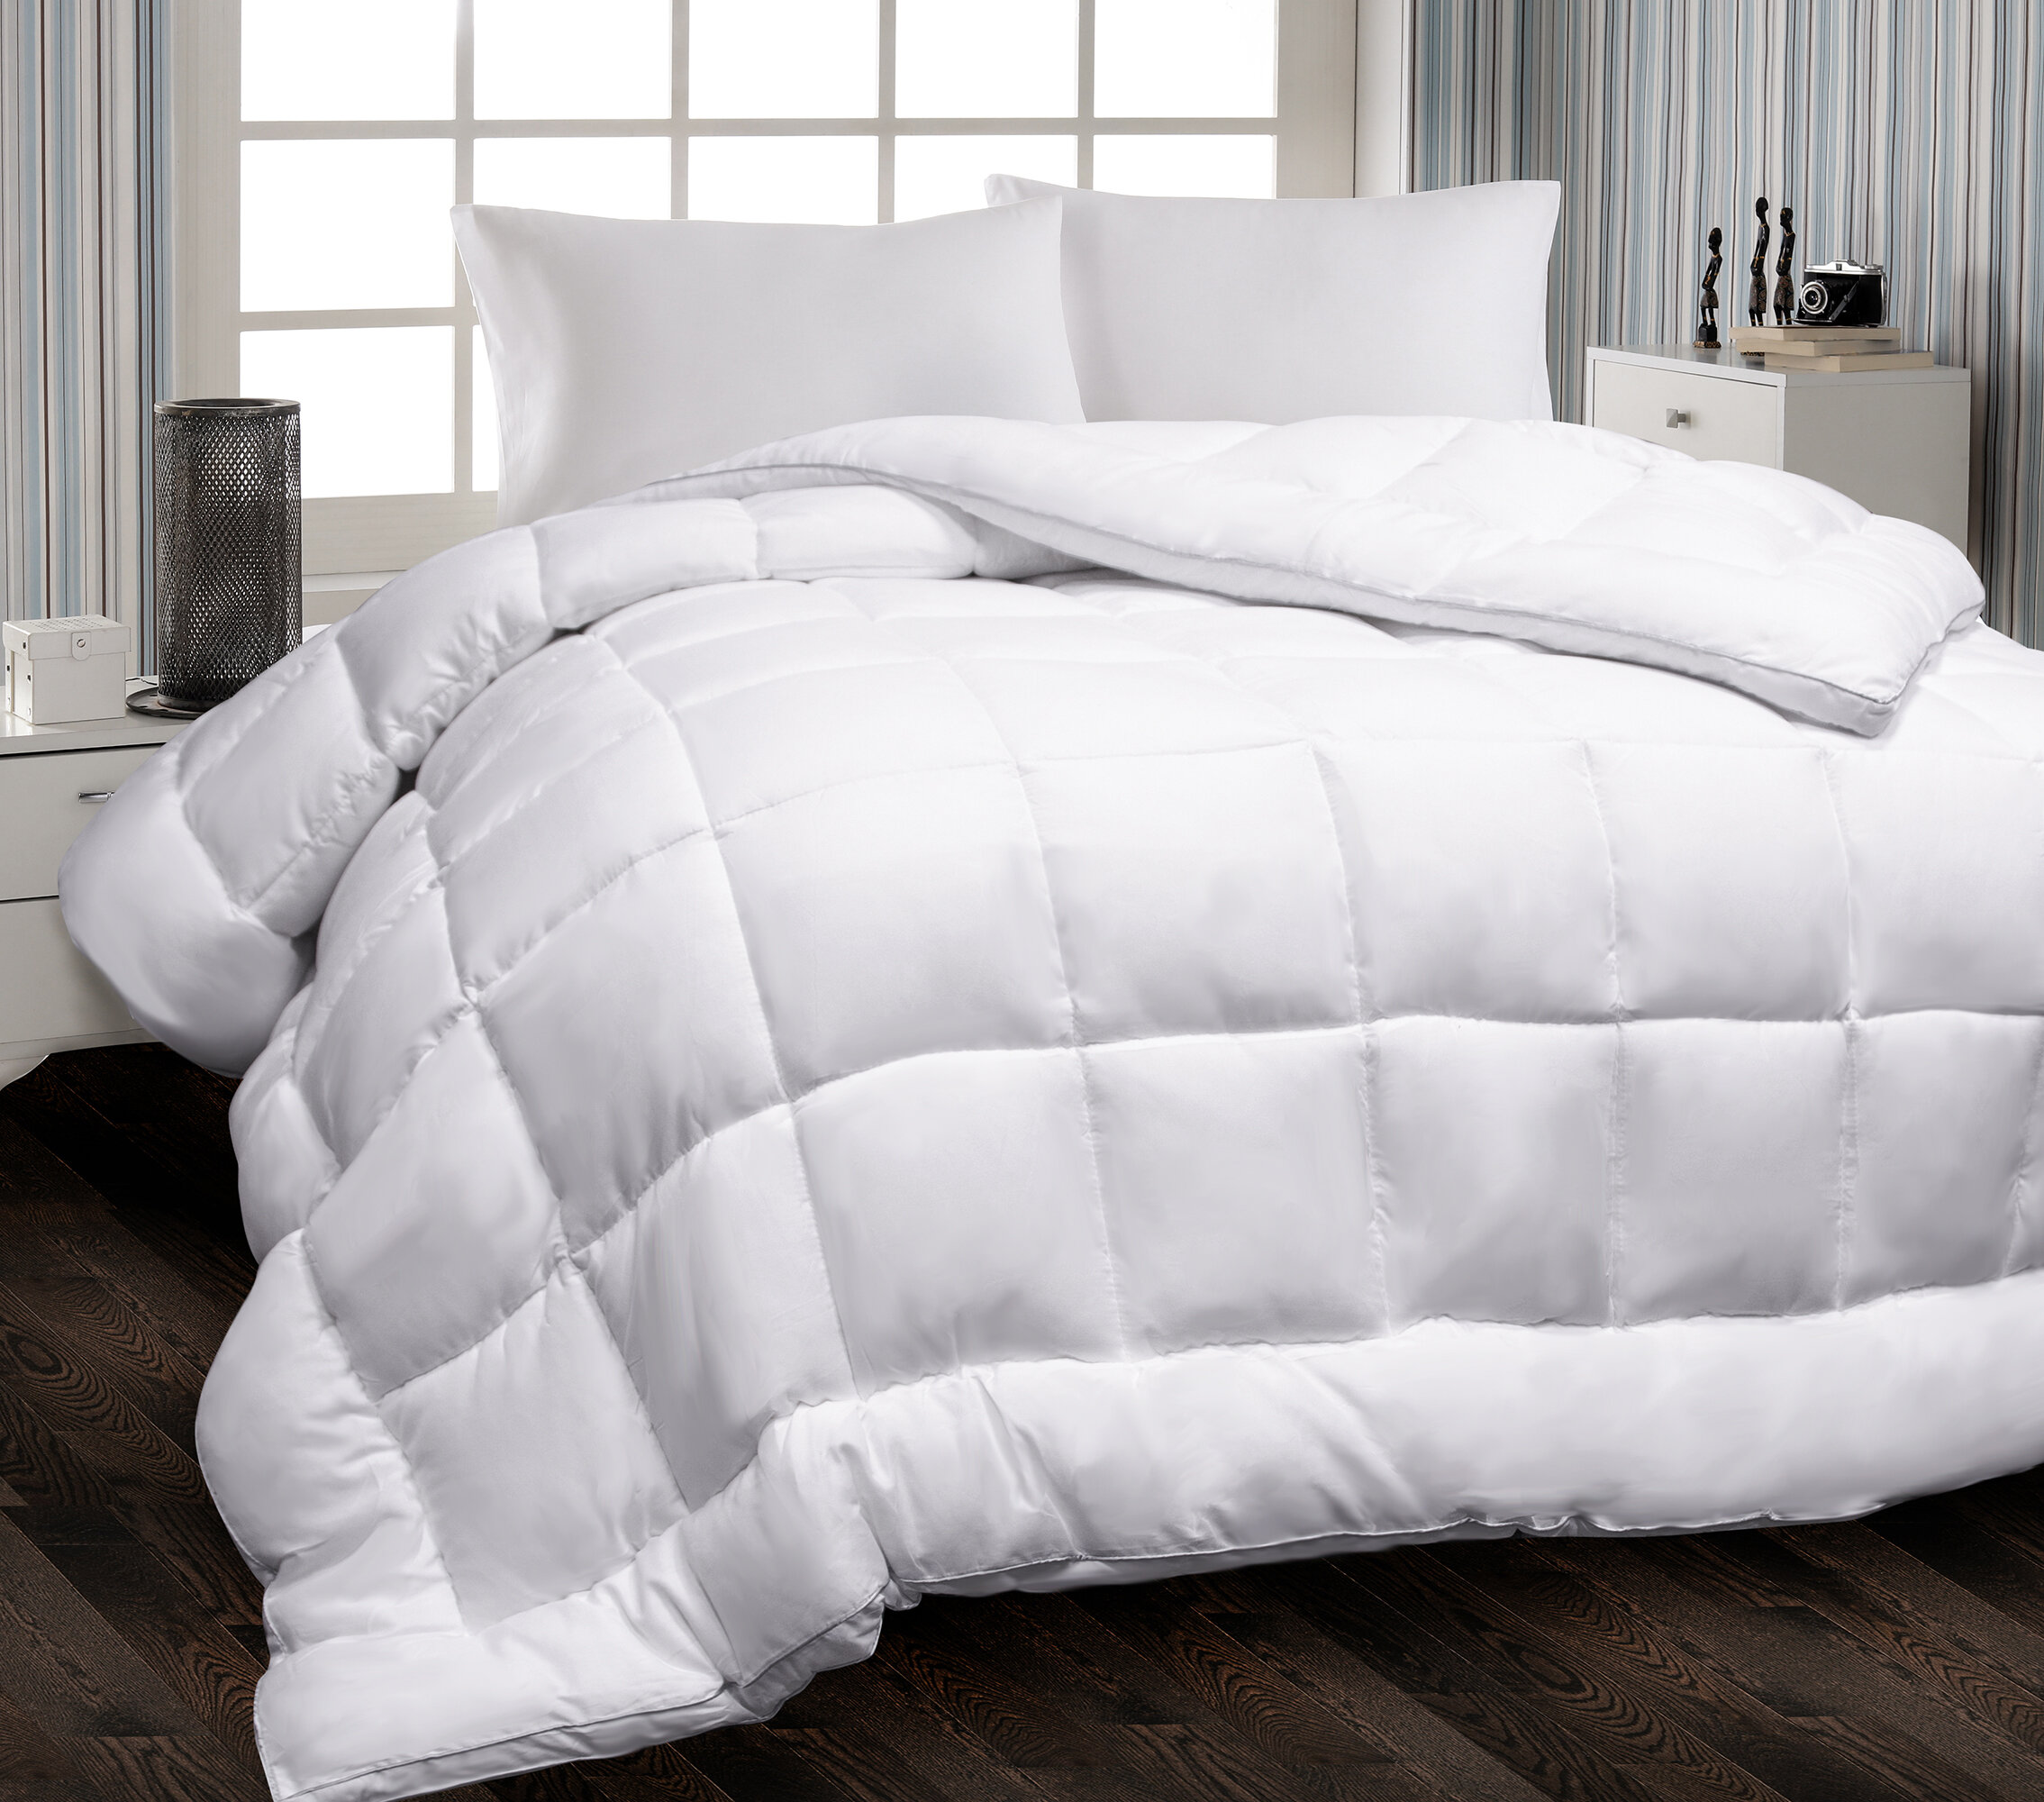 White alternative down comforter - king size 